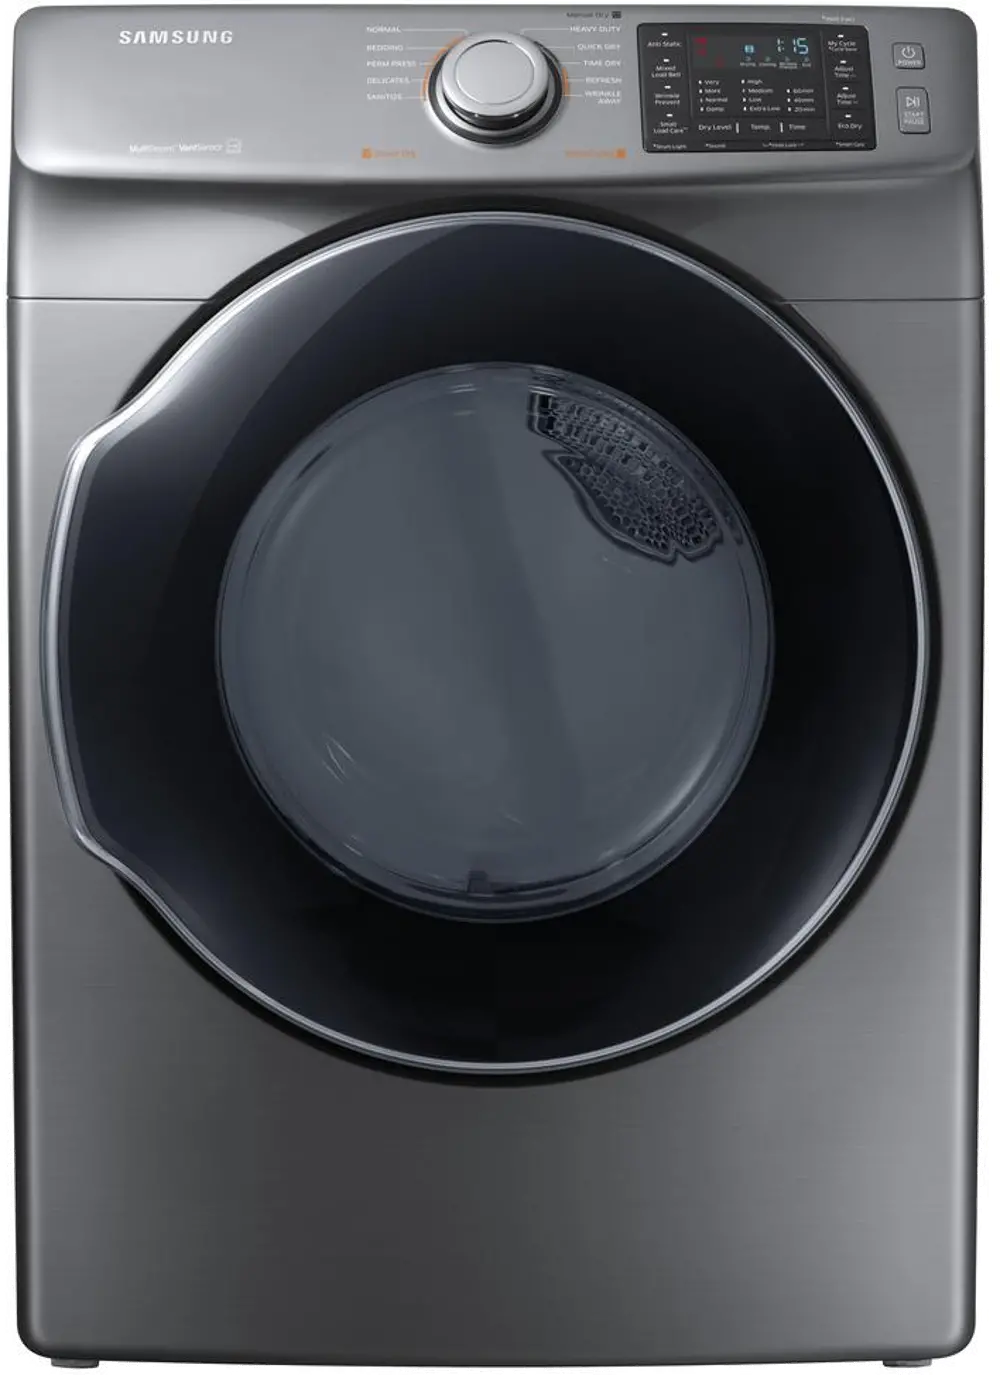 DVE45M5500P Samsung Electric Dryer with Steam - 7.5 cu. ft. Platinum-1